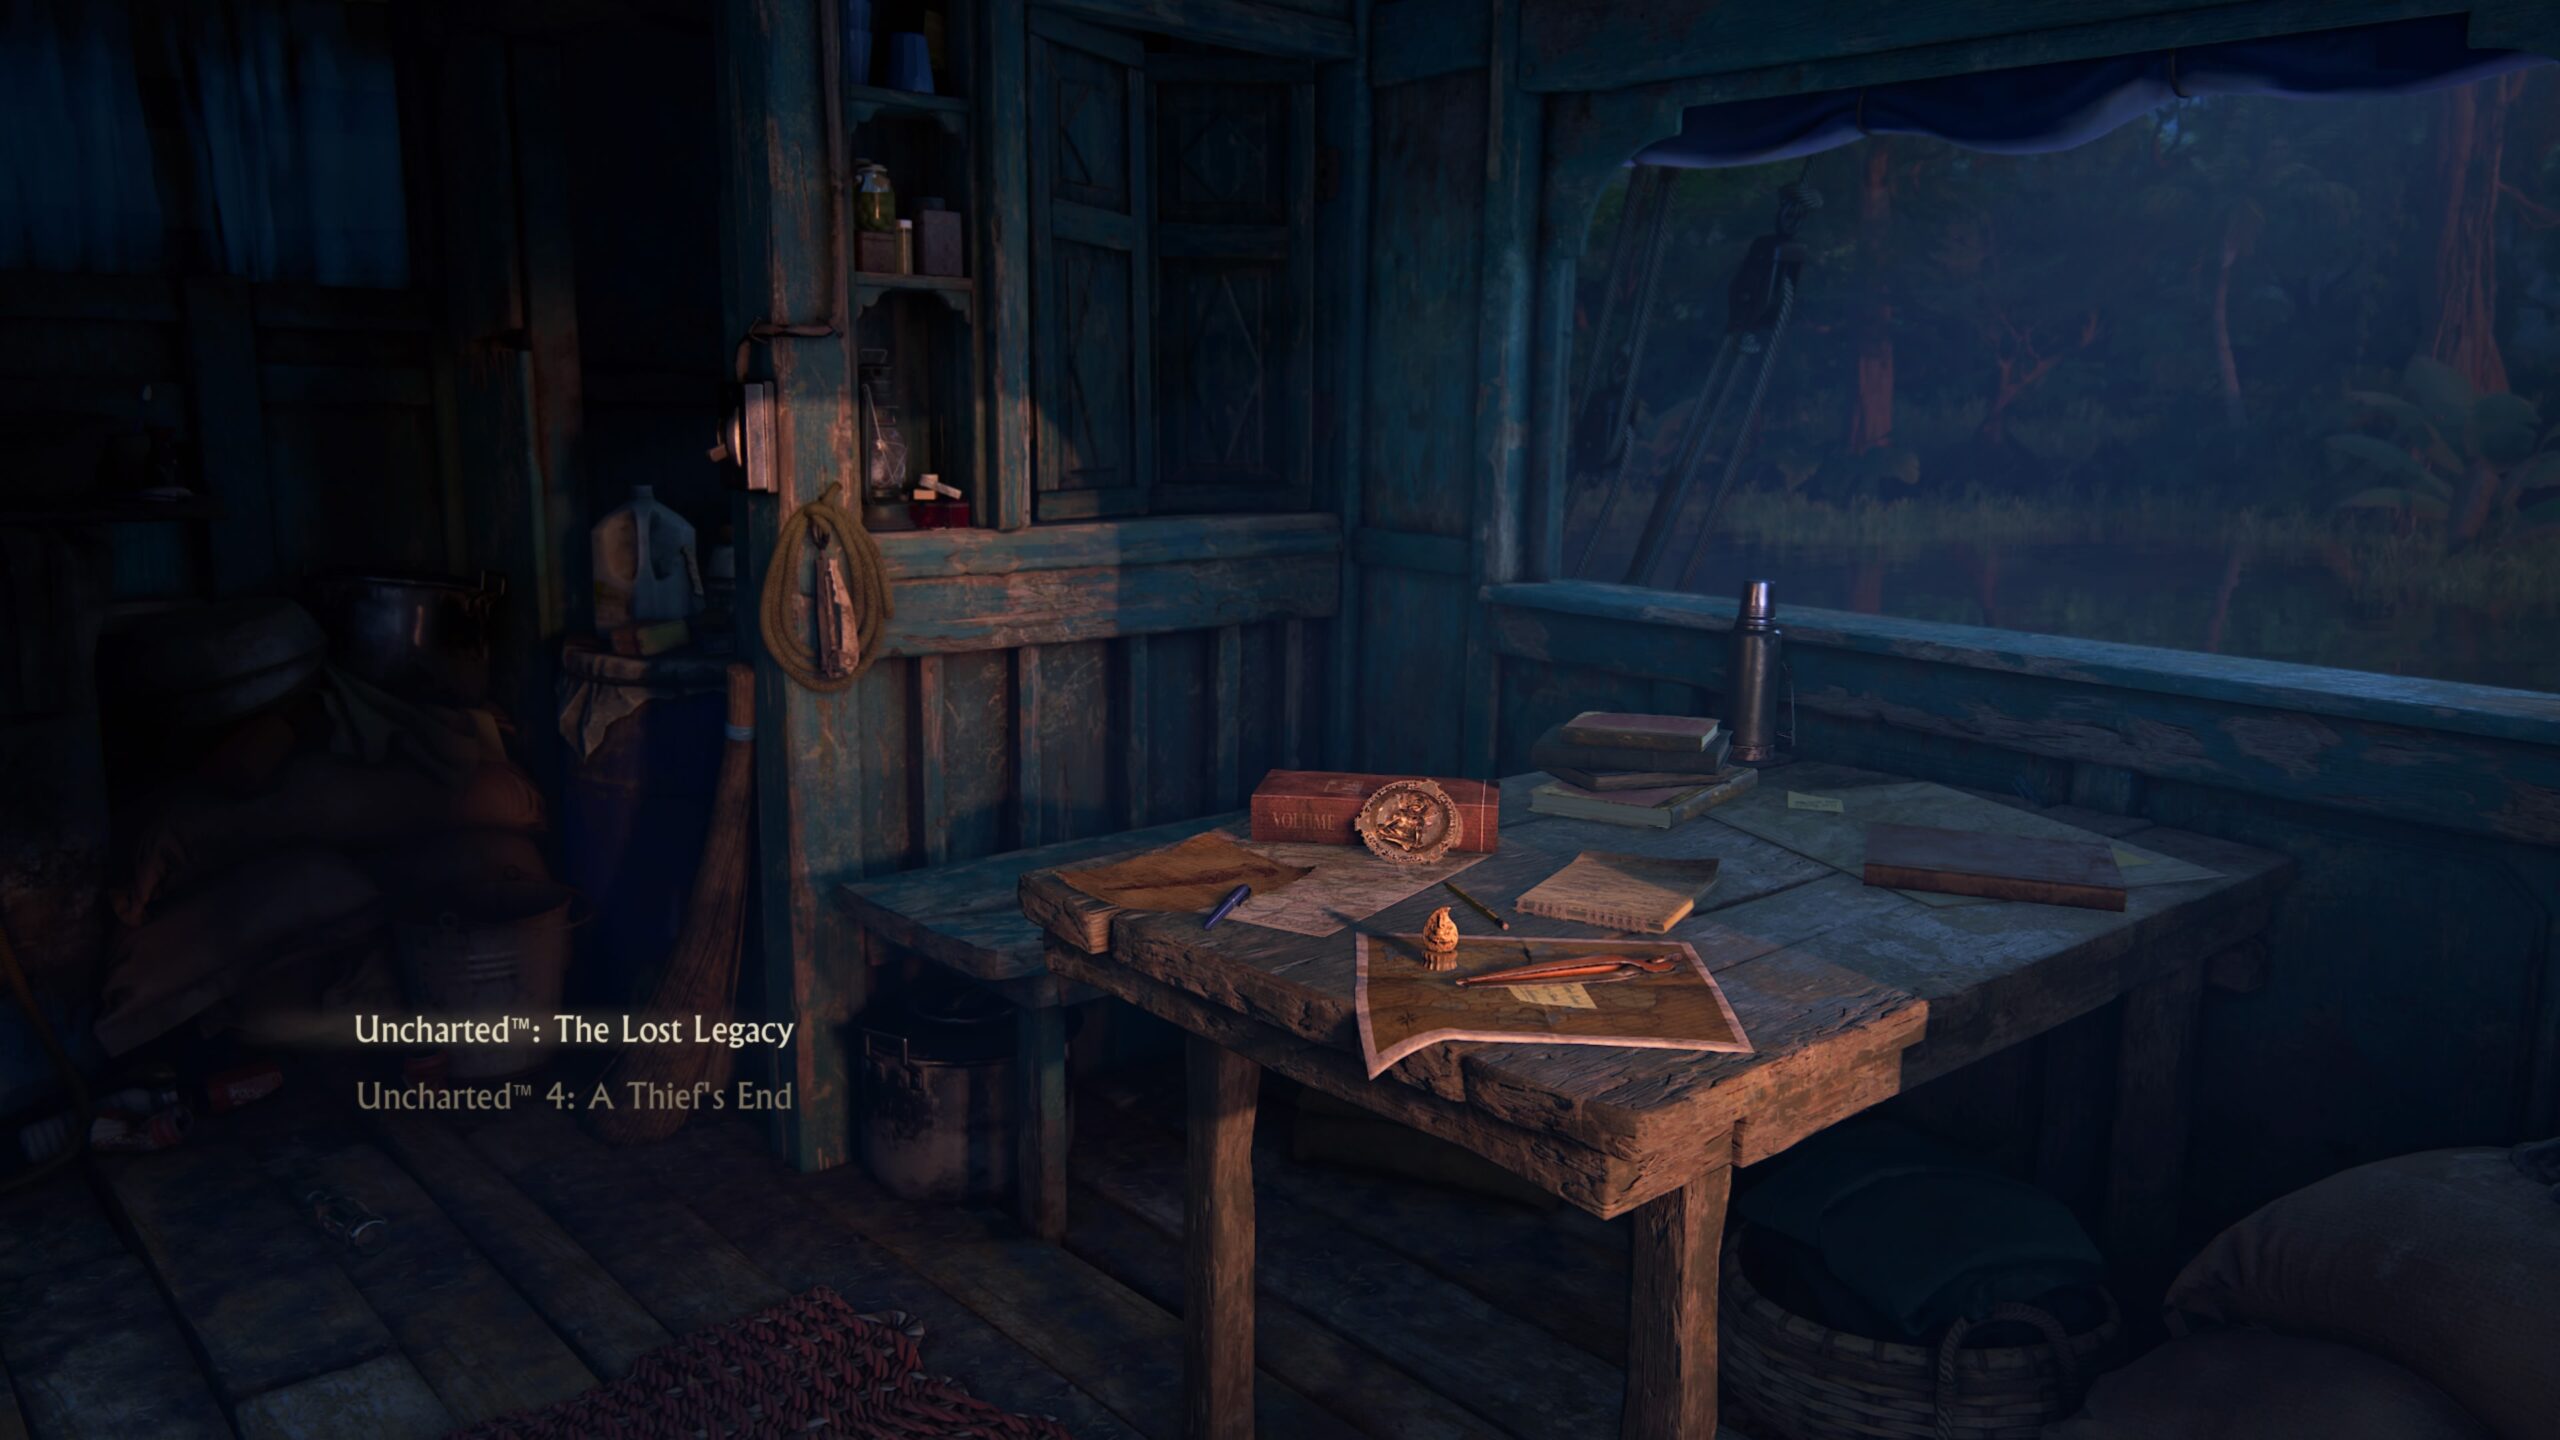 Uncharted: Legacy of Thieves — PS5-комплект оновленої “класики”